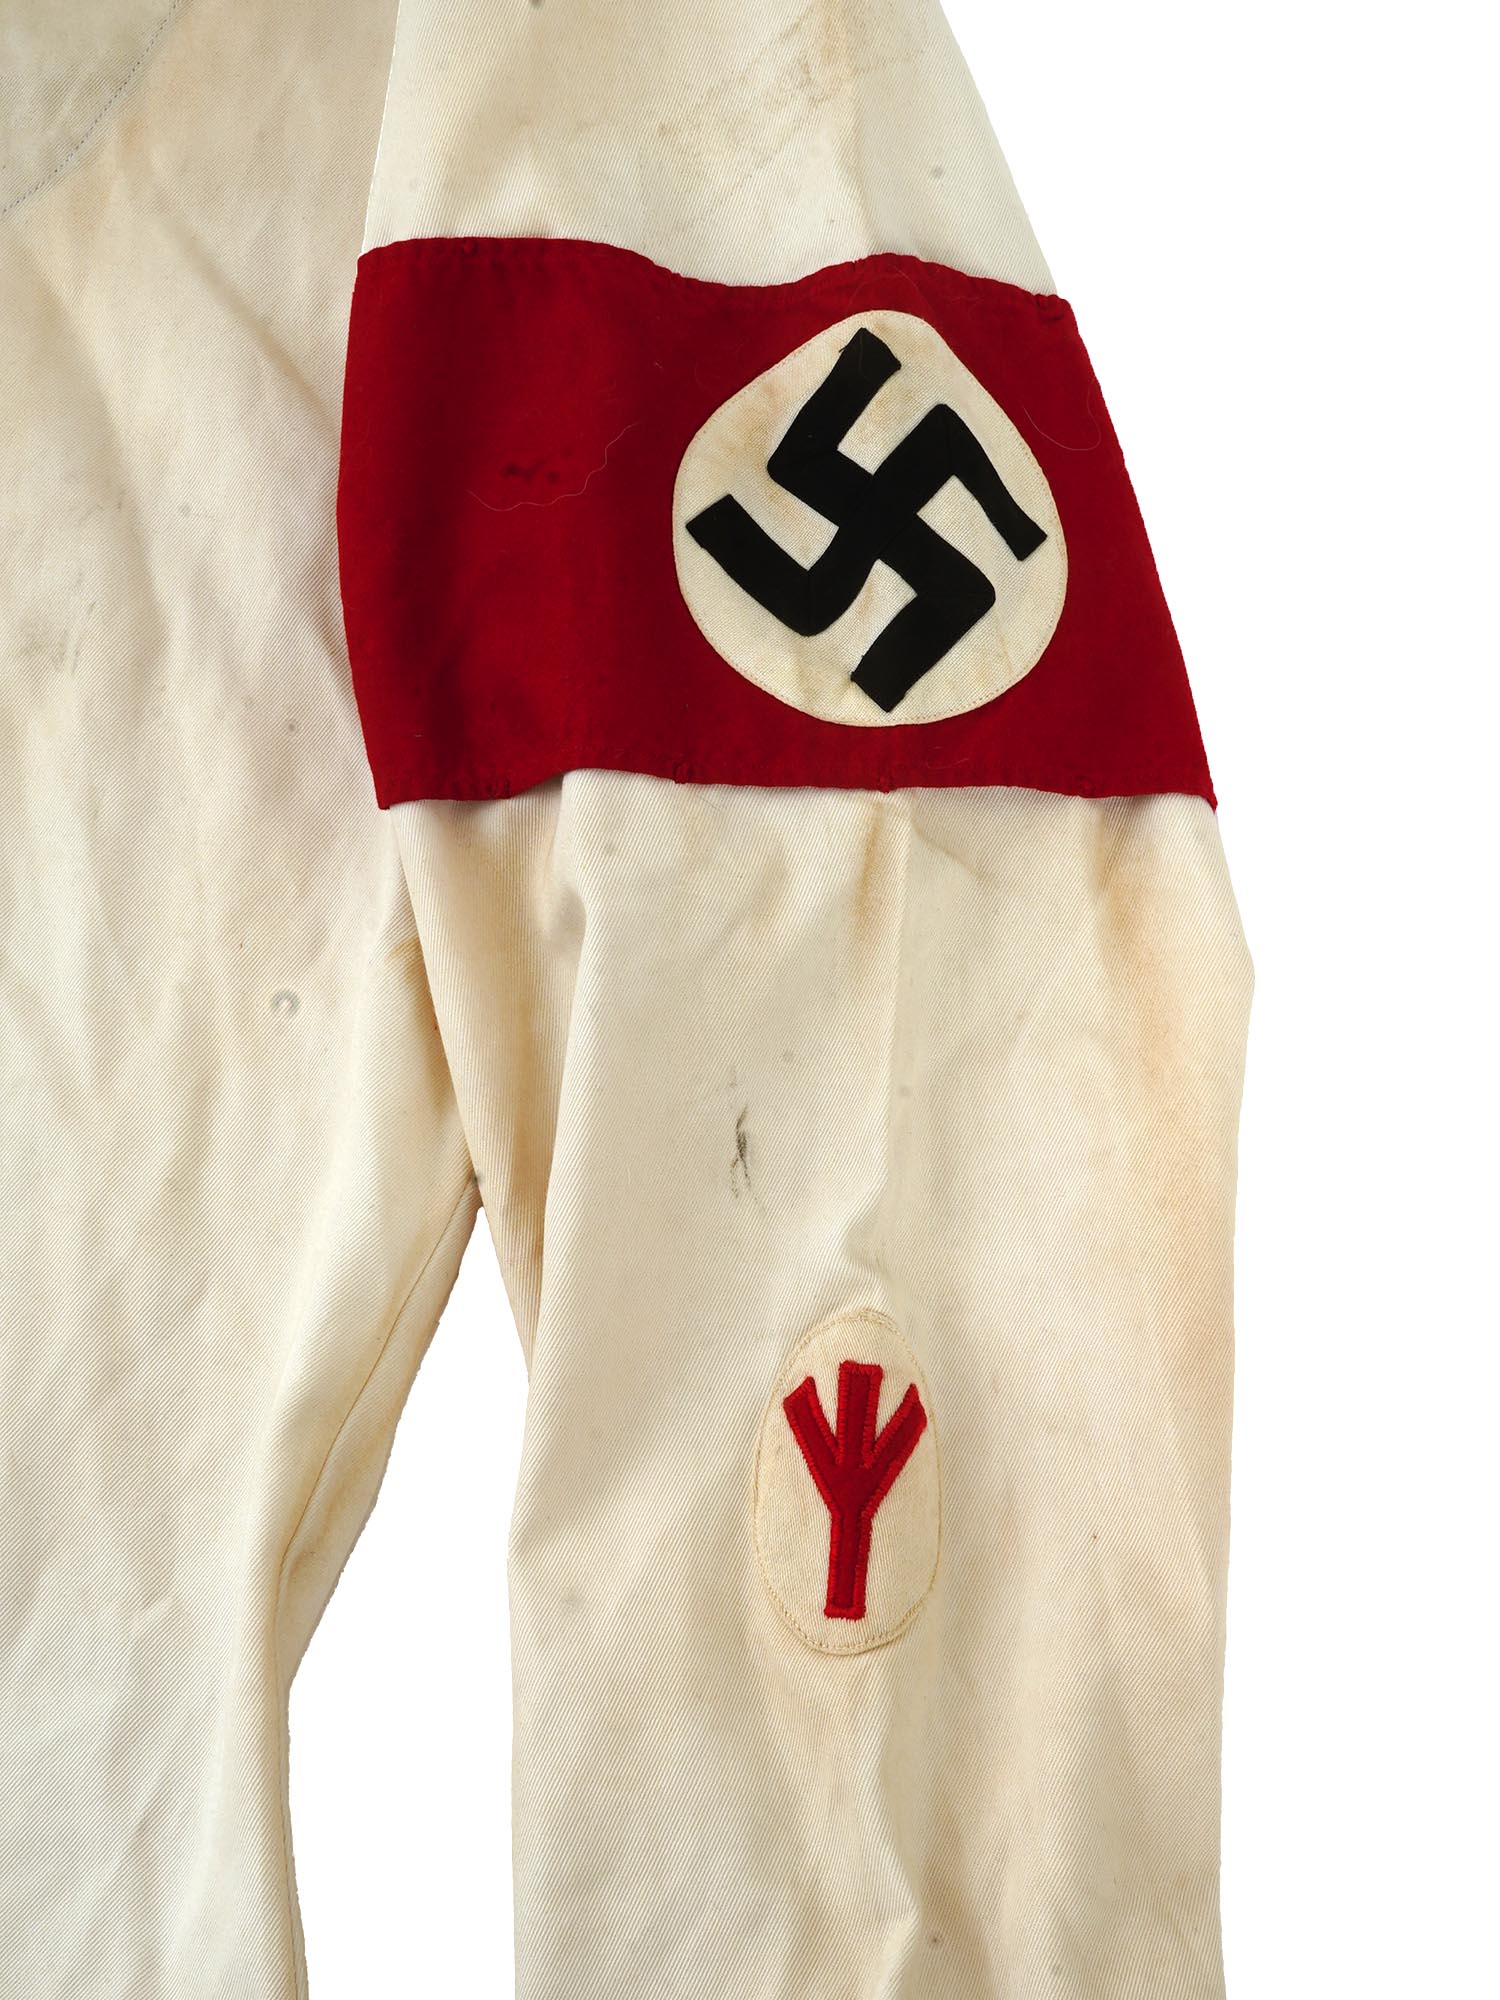 WWII NAZI GERMAN WHITE KRIEGSMARINE UNIFORM SHIRT PIC-3